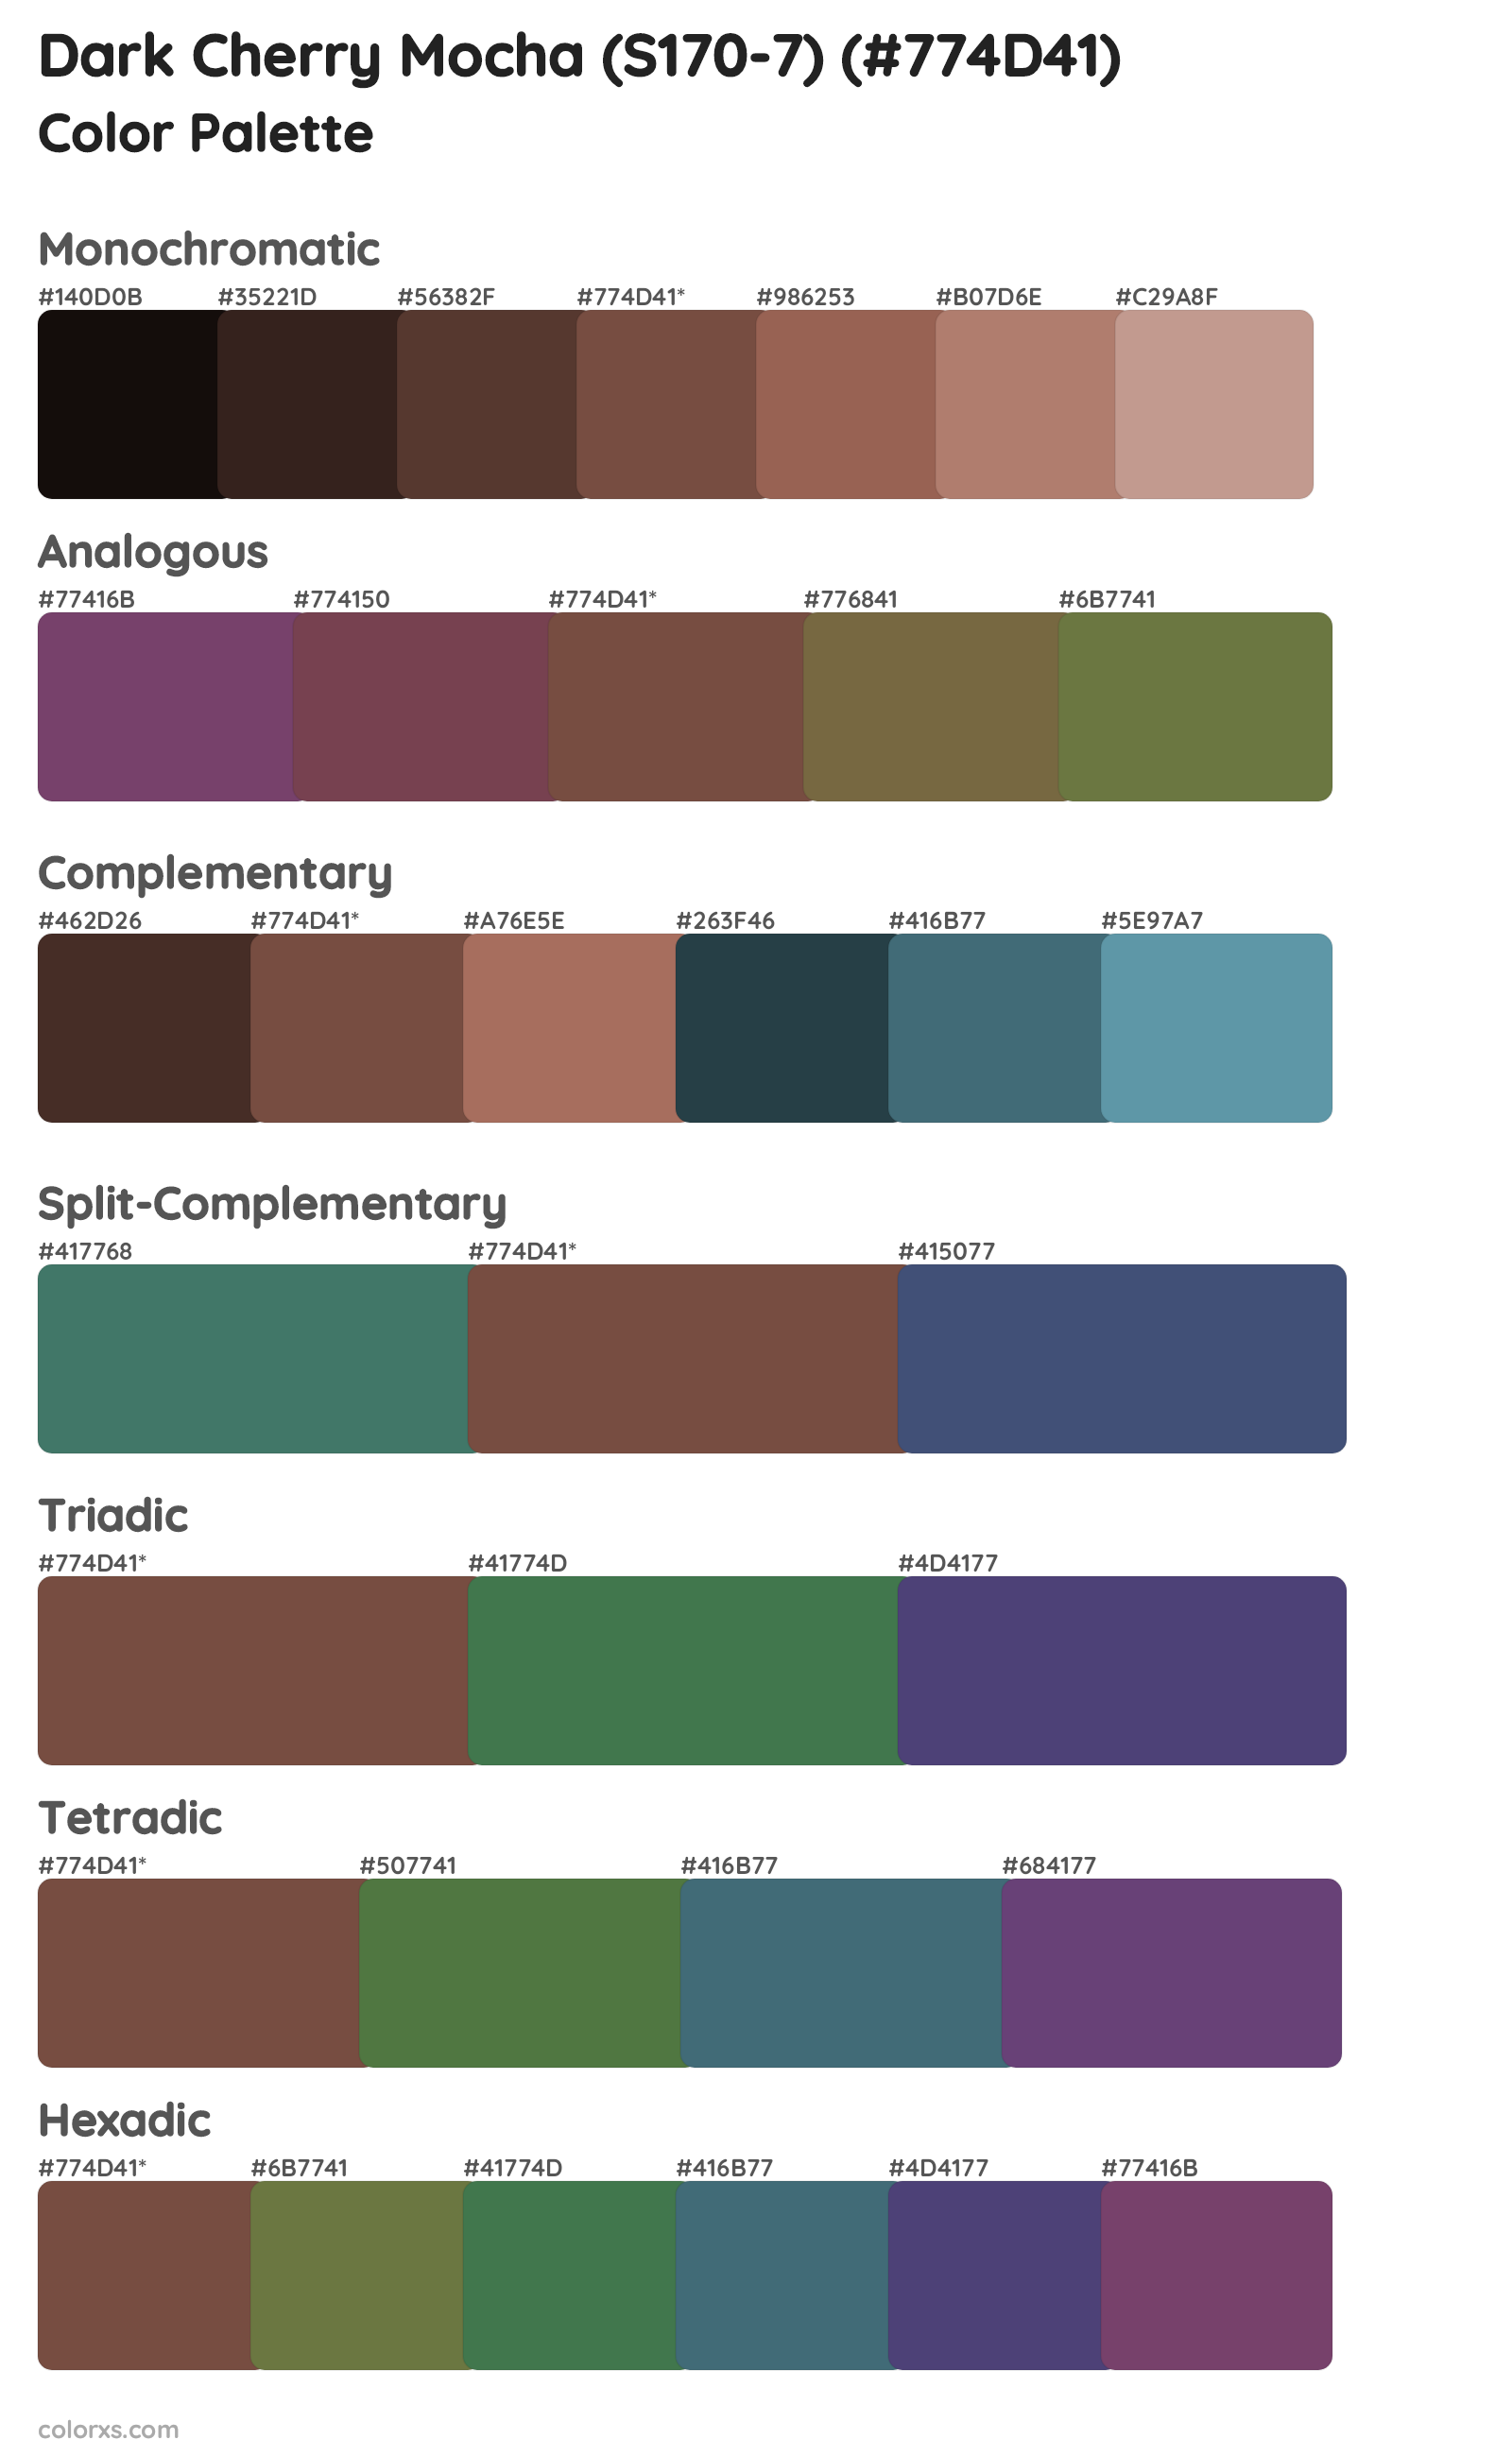 Dark Cherry Mocha (S170-7) Color Scheme Palettes